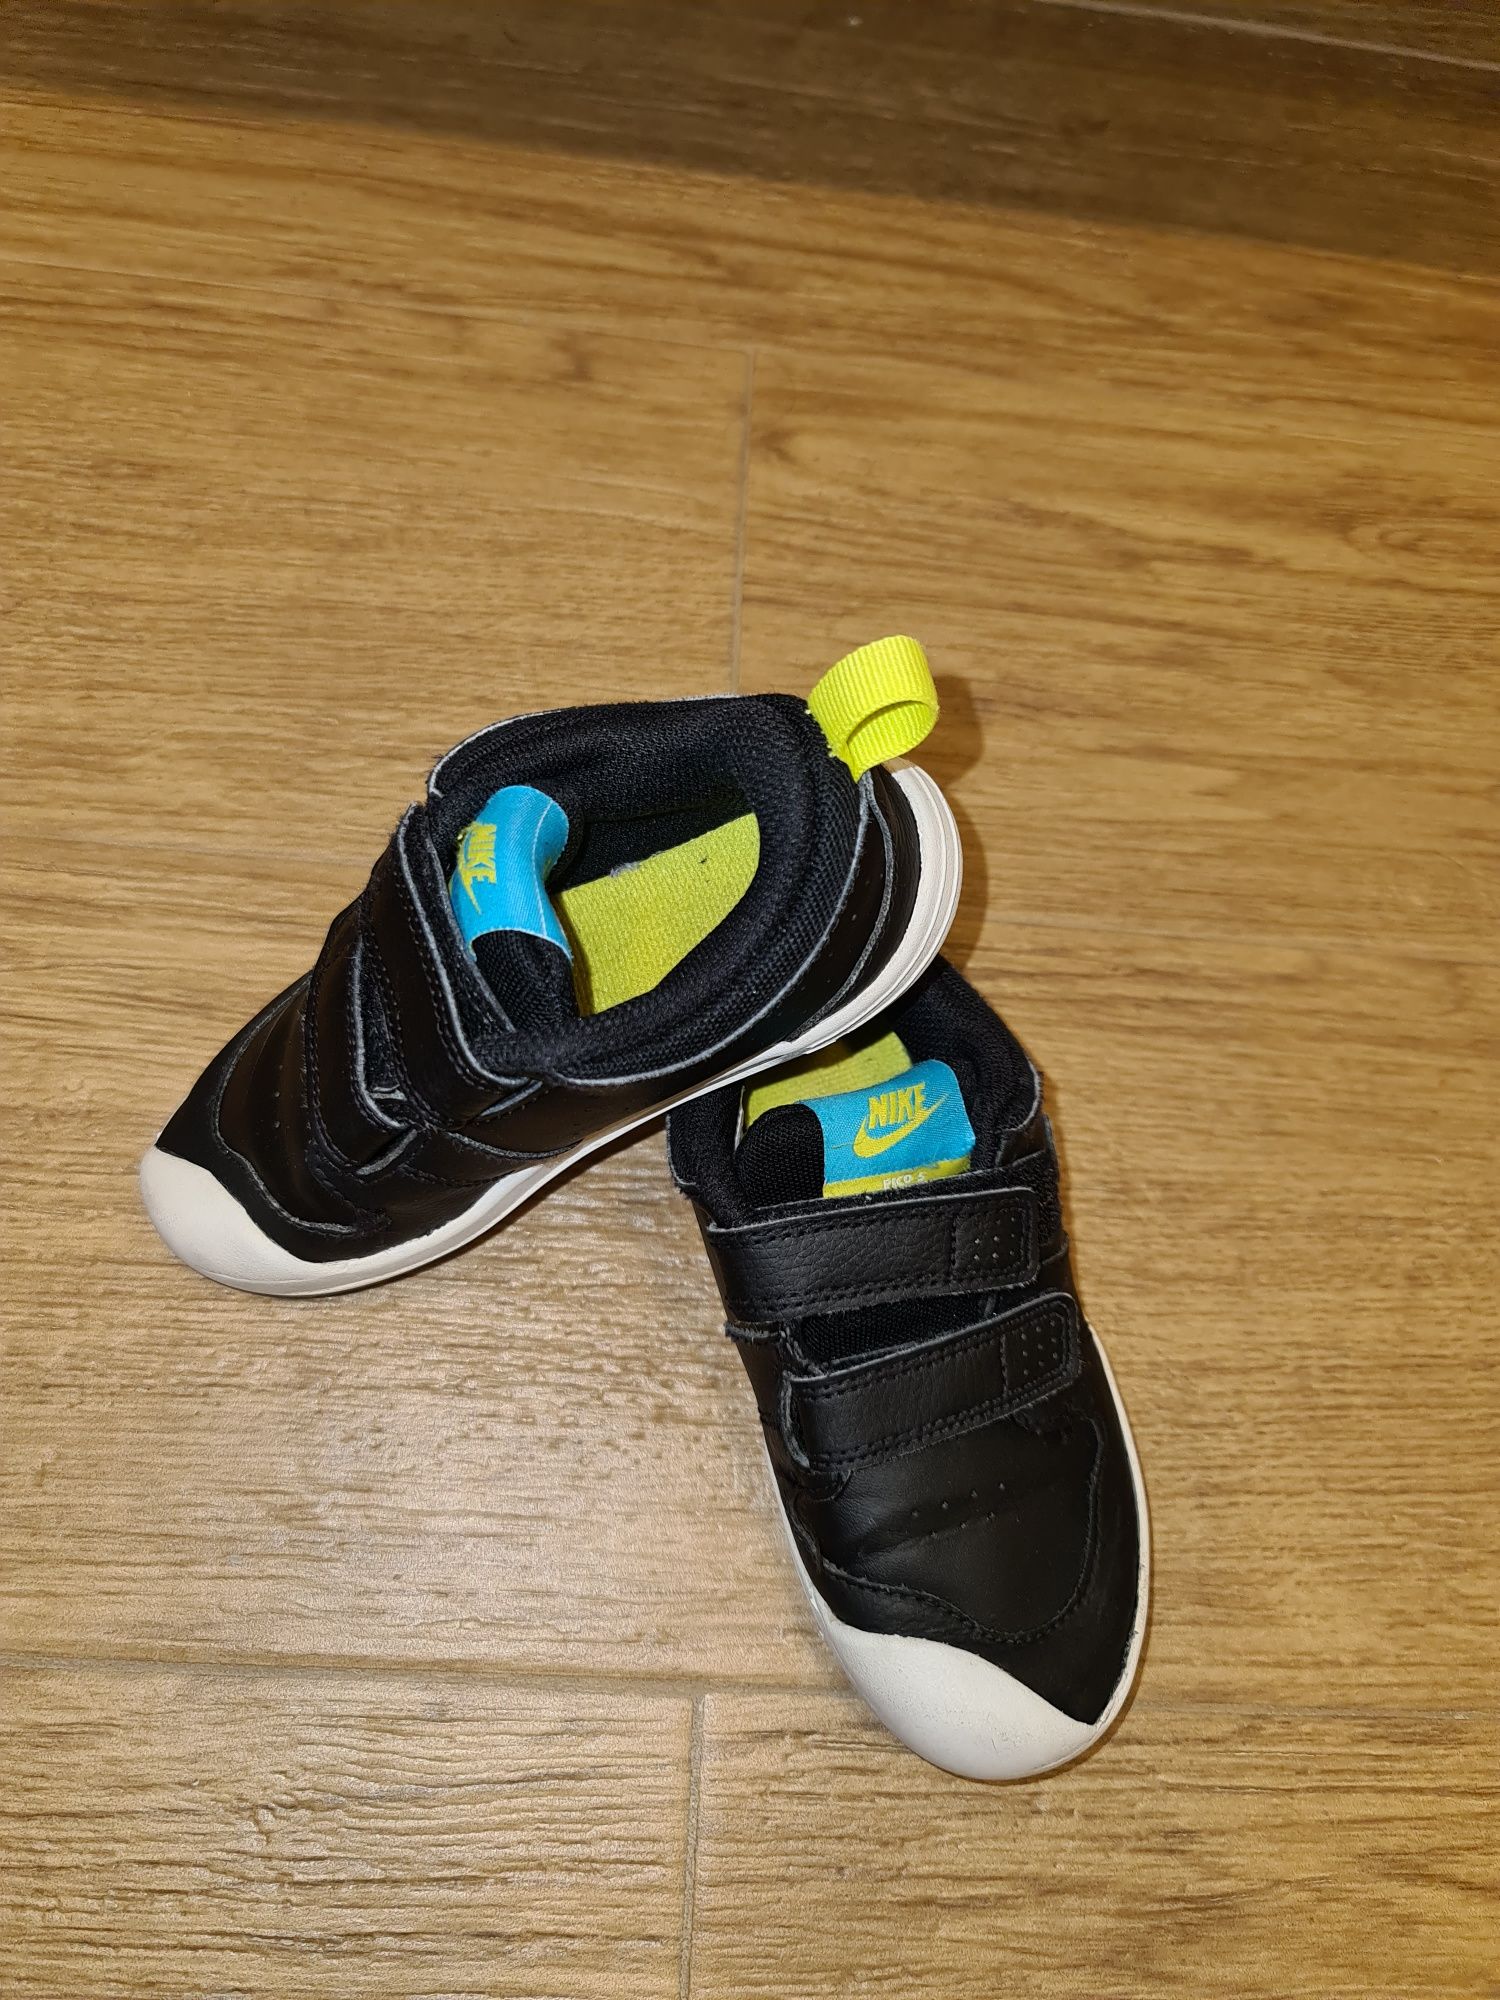 Adidasi Nike copii marime 27, 16 cm